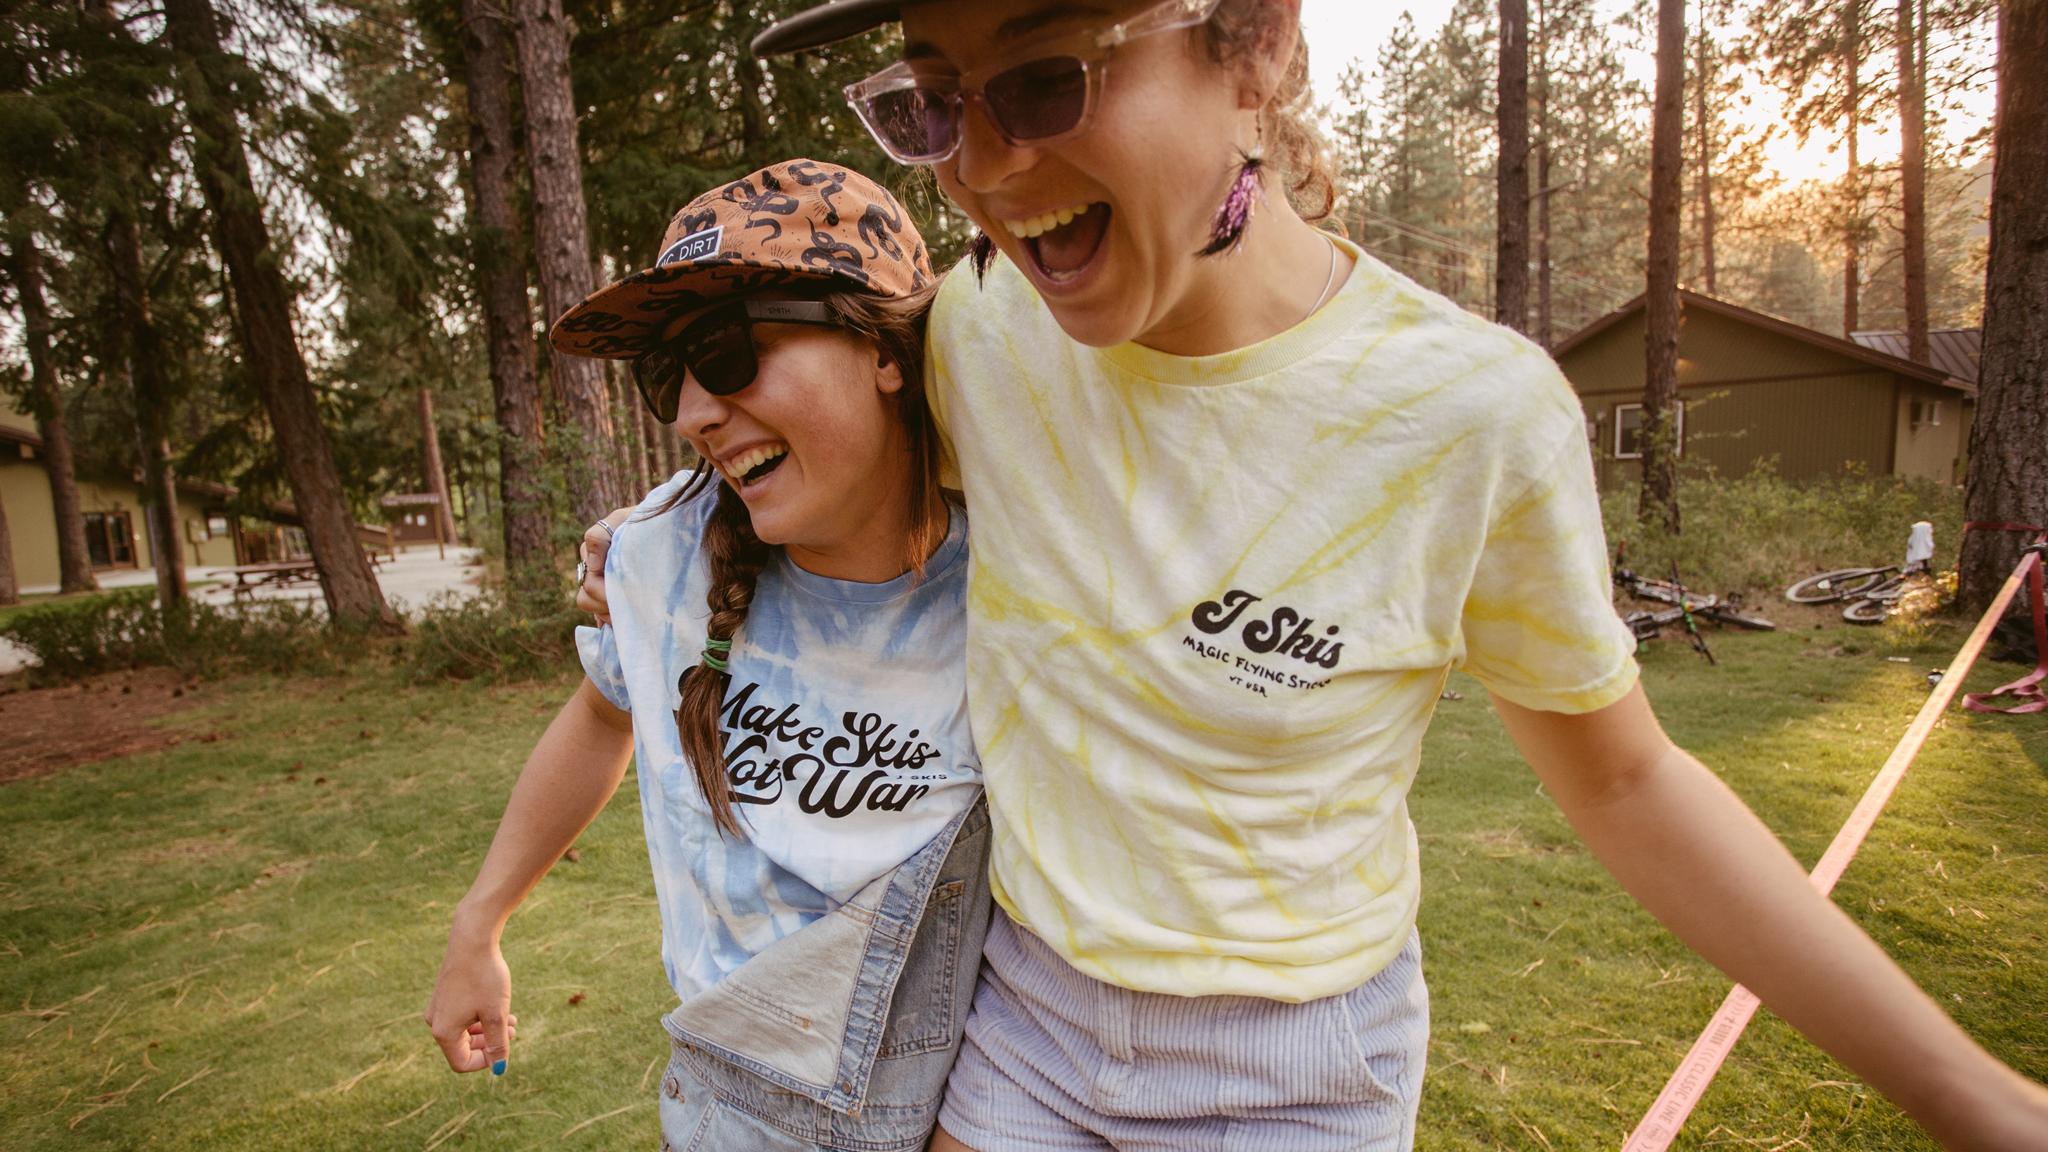 Two girls on slack line wearng tie-dye J skis t-shirts